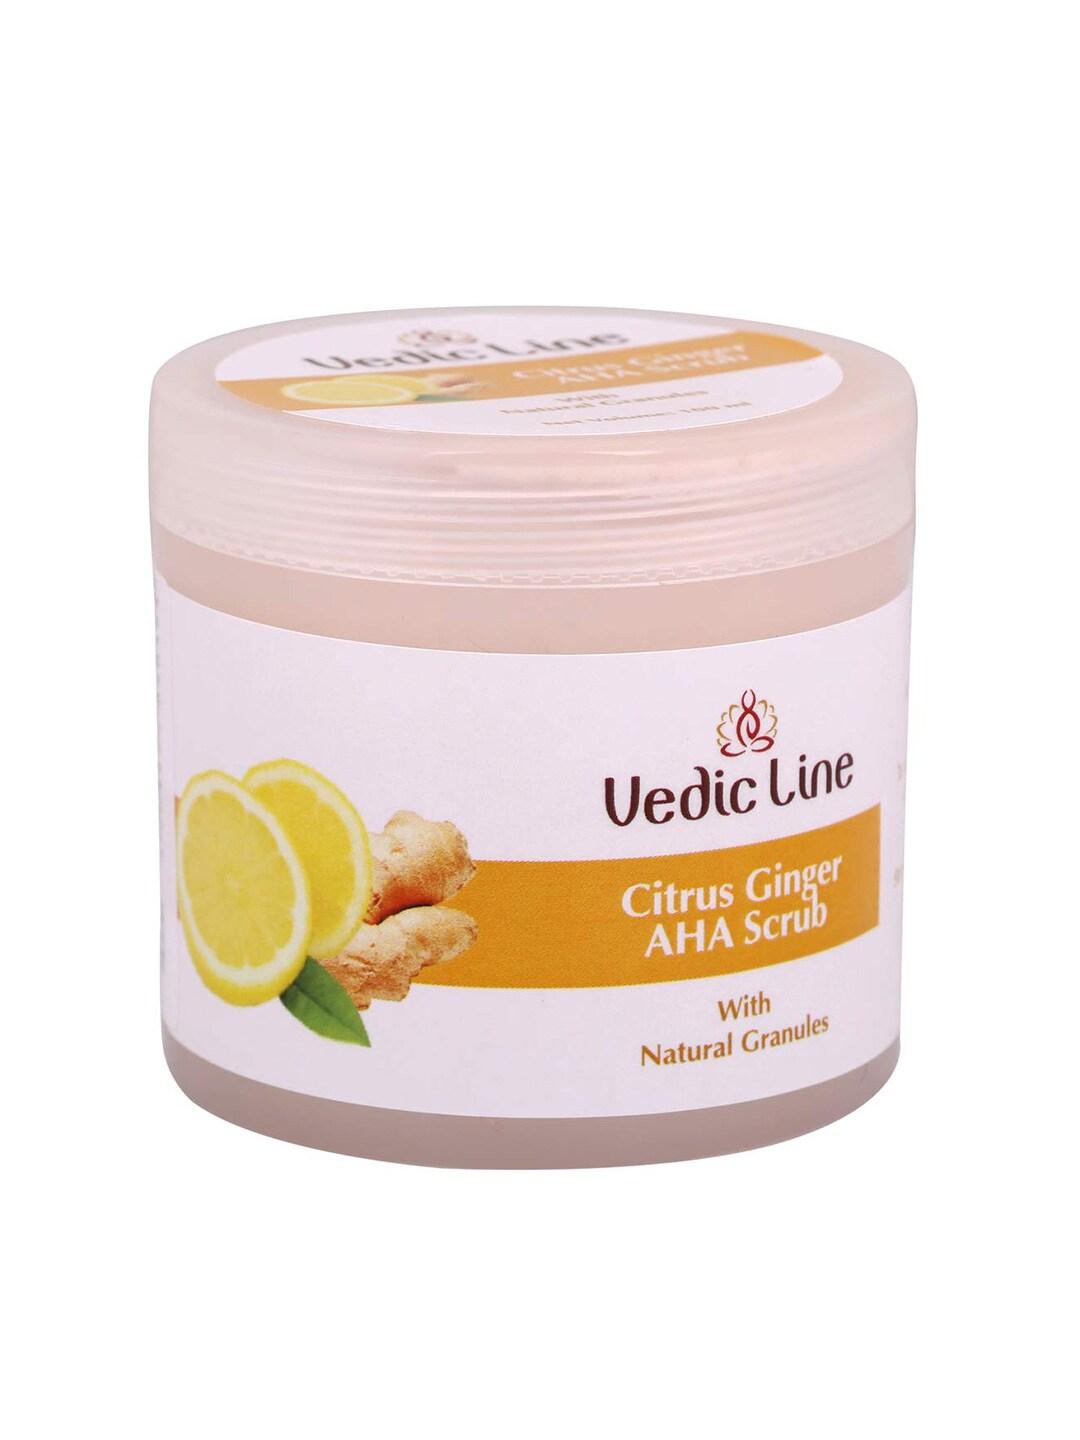 Vedicline Citrus Ginger AHA Face Scrub With Natural Granules - 100ml